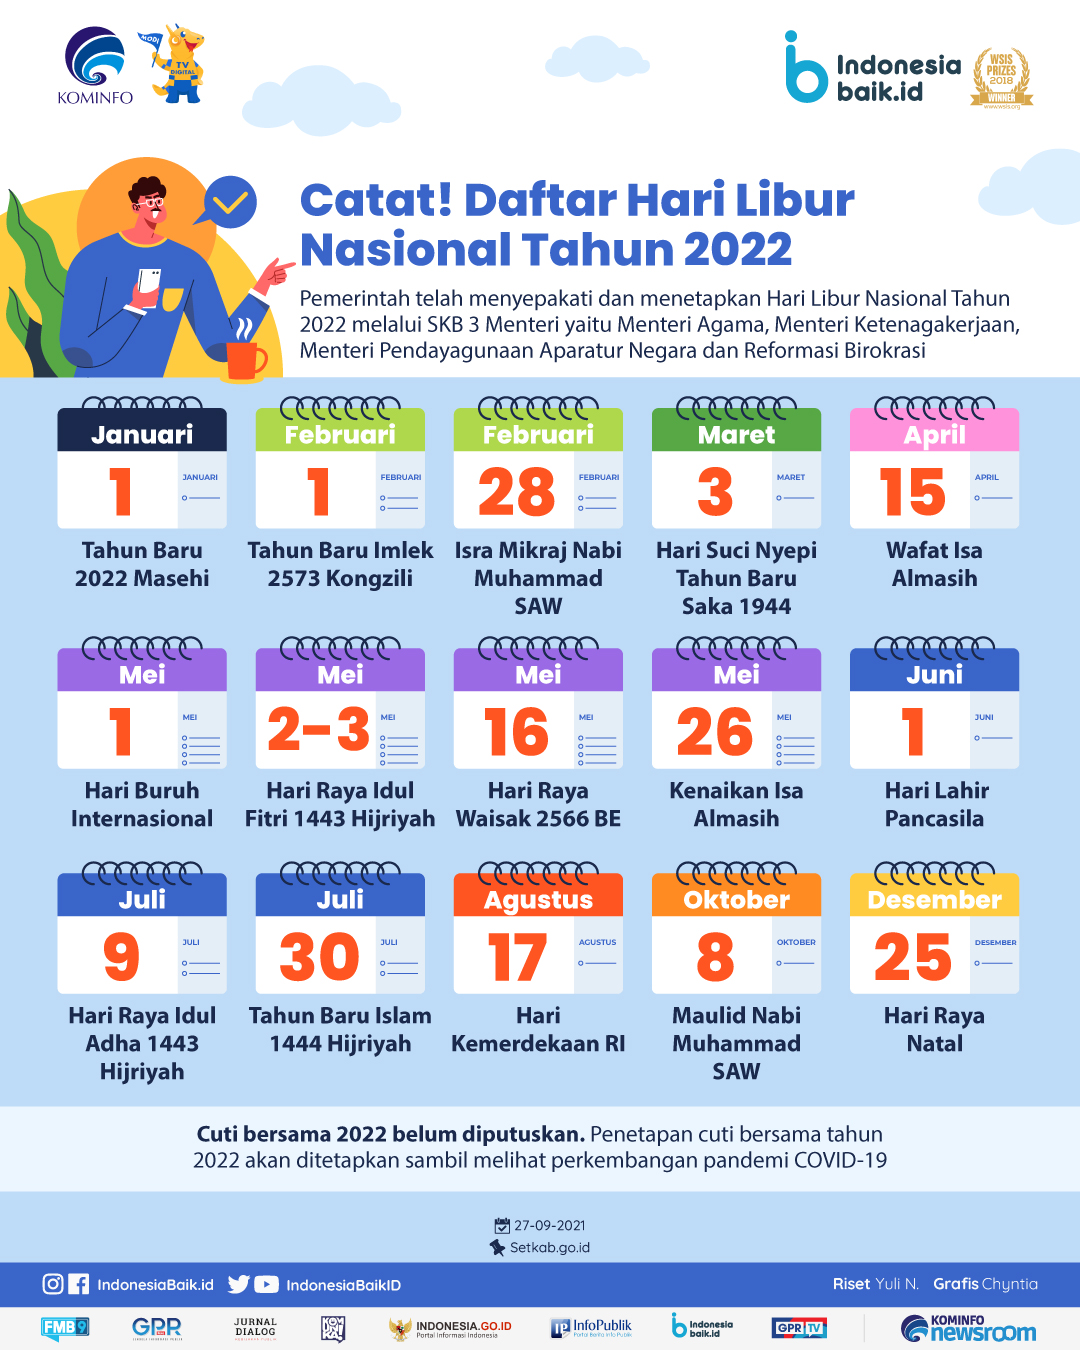 Indonesia public holiday 2022